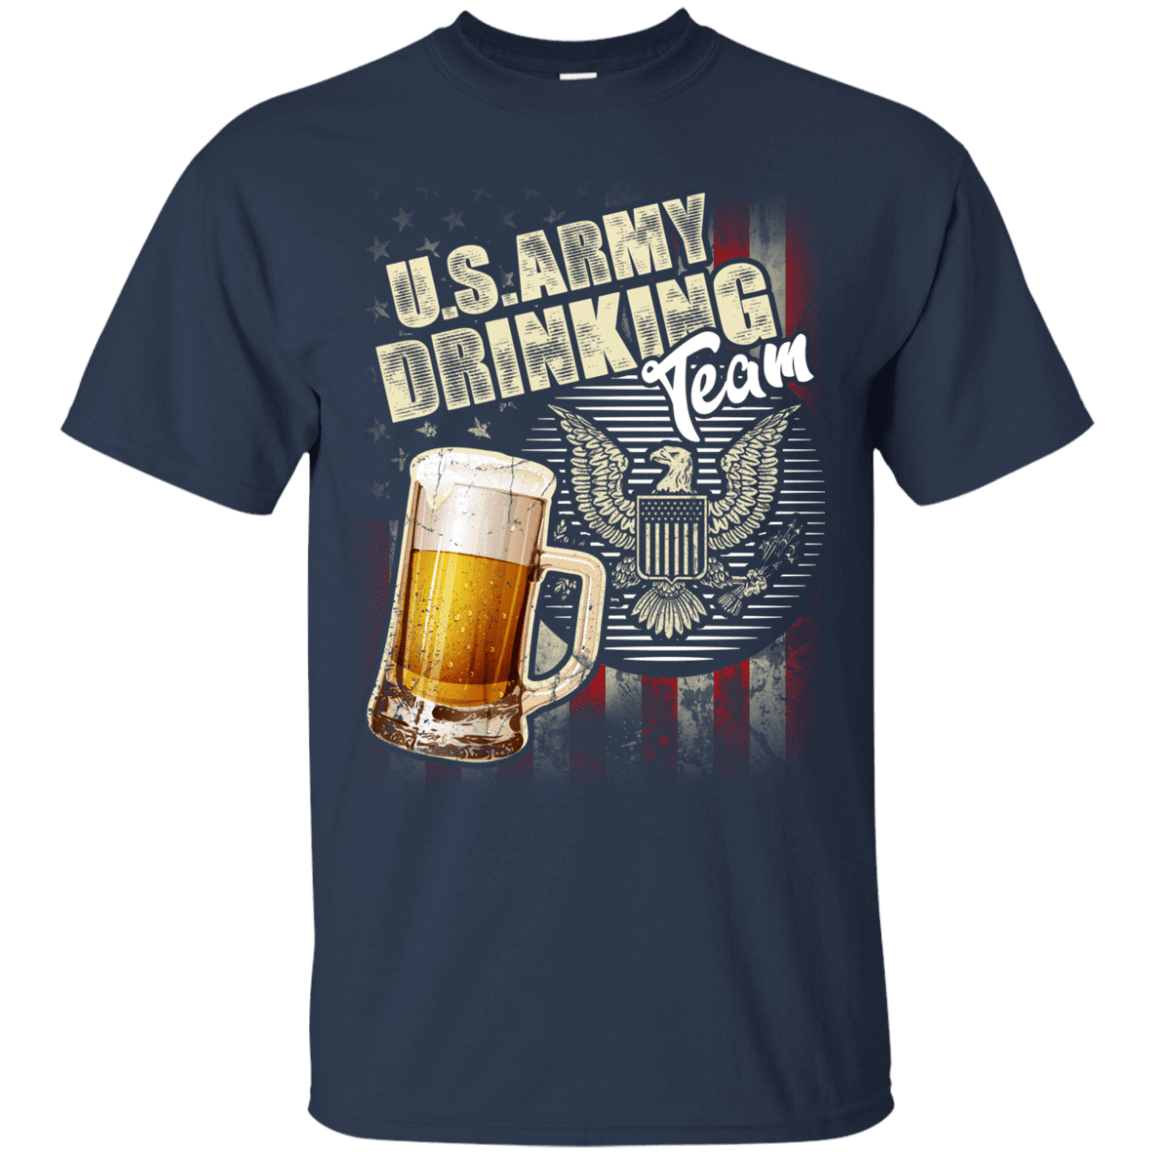 US Army Drinking Bear Team Front T Shirts-TShirt-Army-Veterans Nation